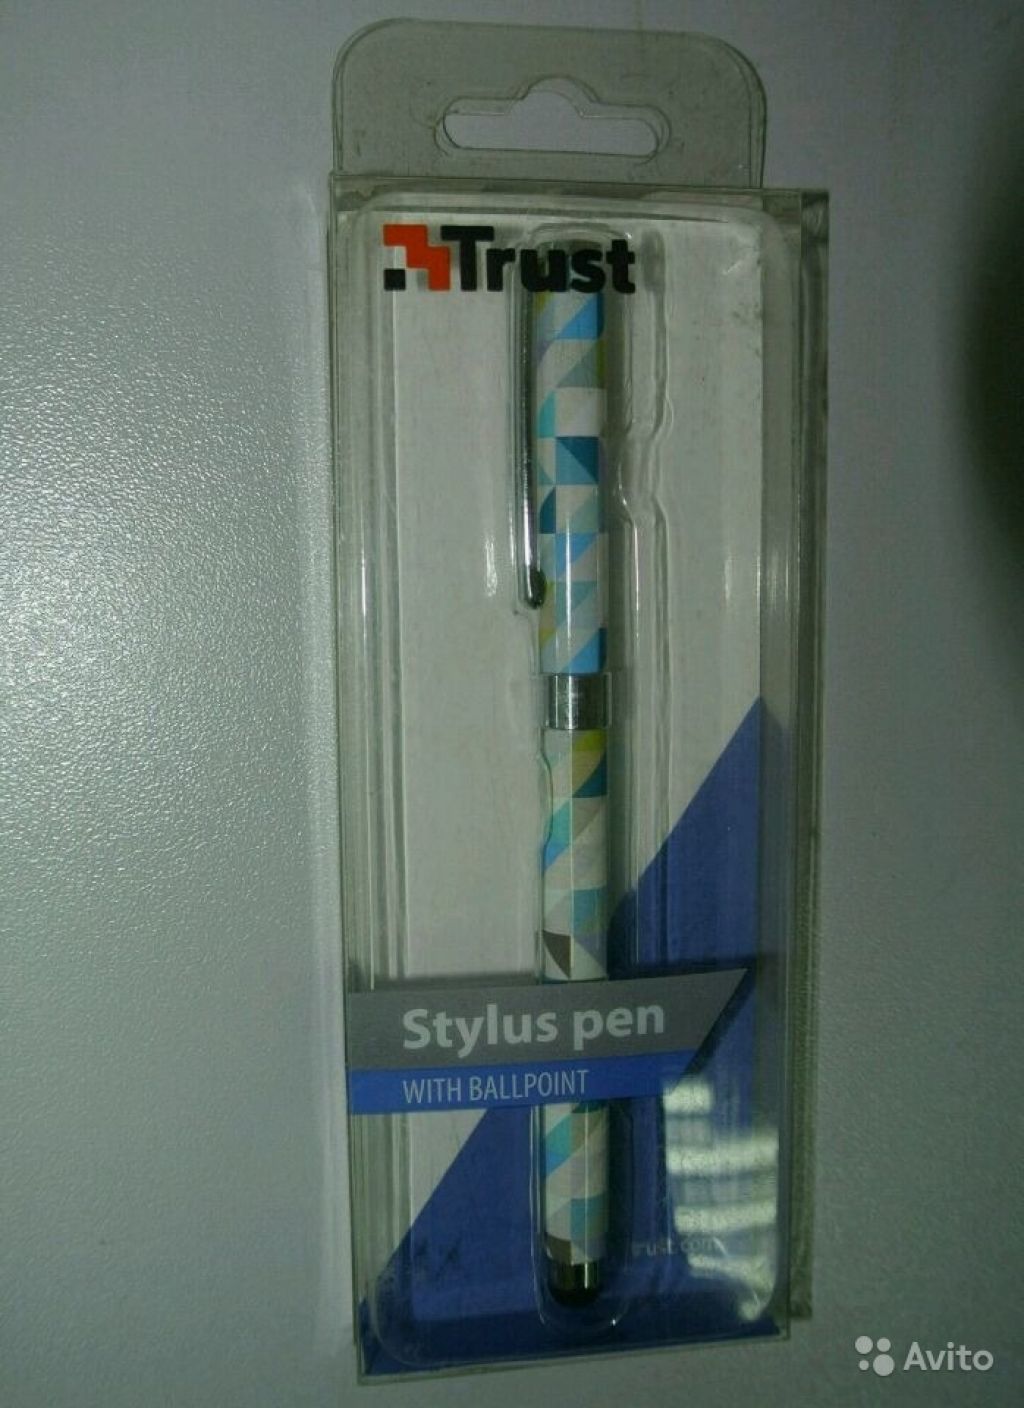 Стилус ручка Trust Byloo Stylus в Москве. Фото 1